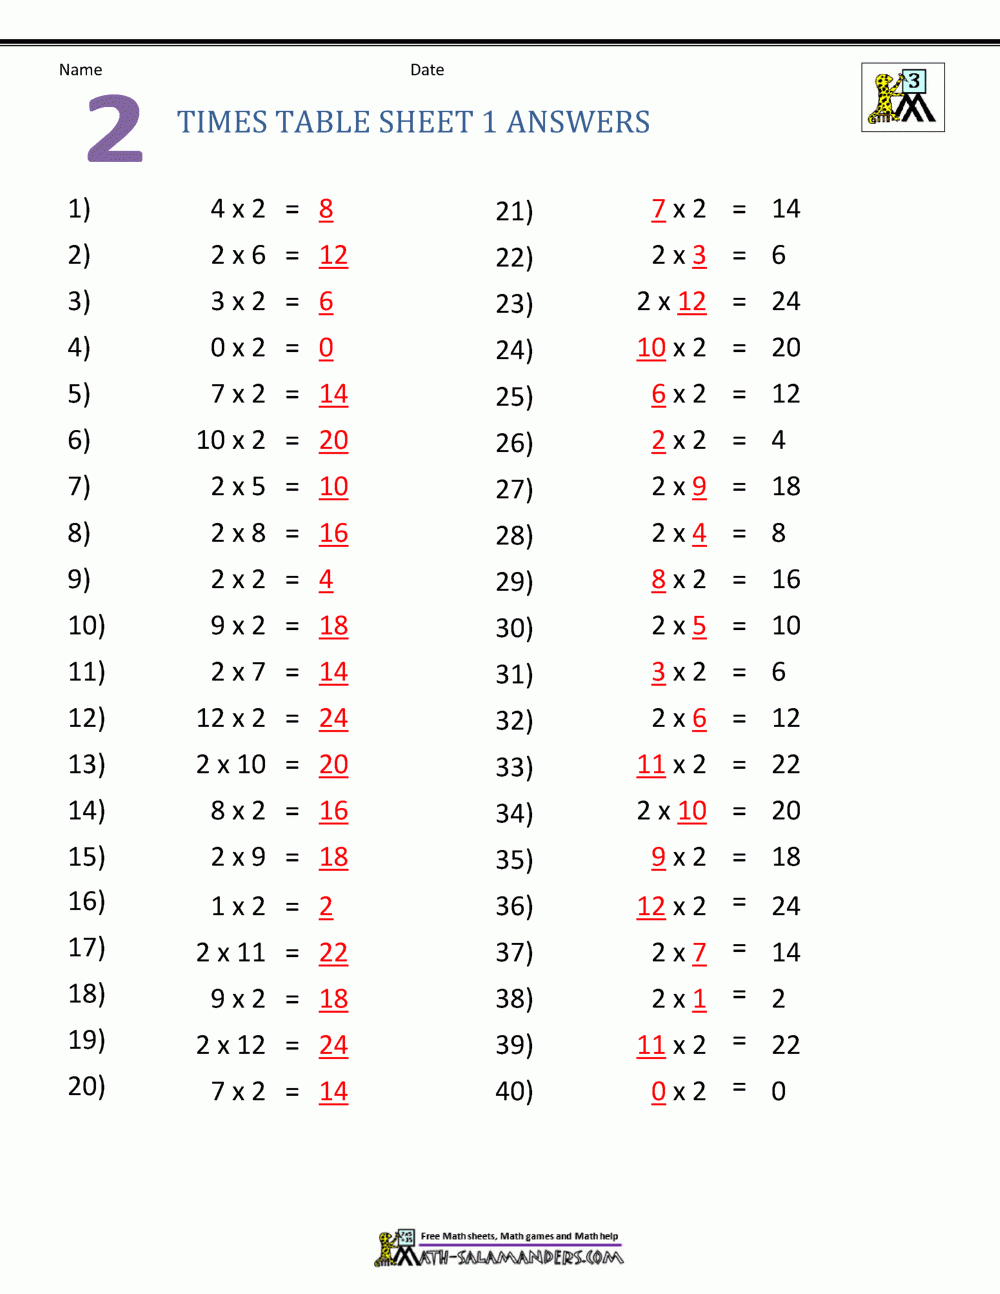 Multiplication Table Worksheets Grade 3 intended for Multiplication Worksheets 4S And 5S